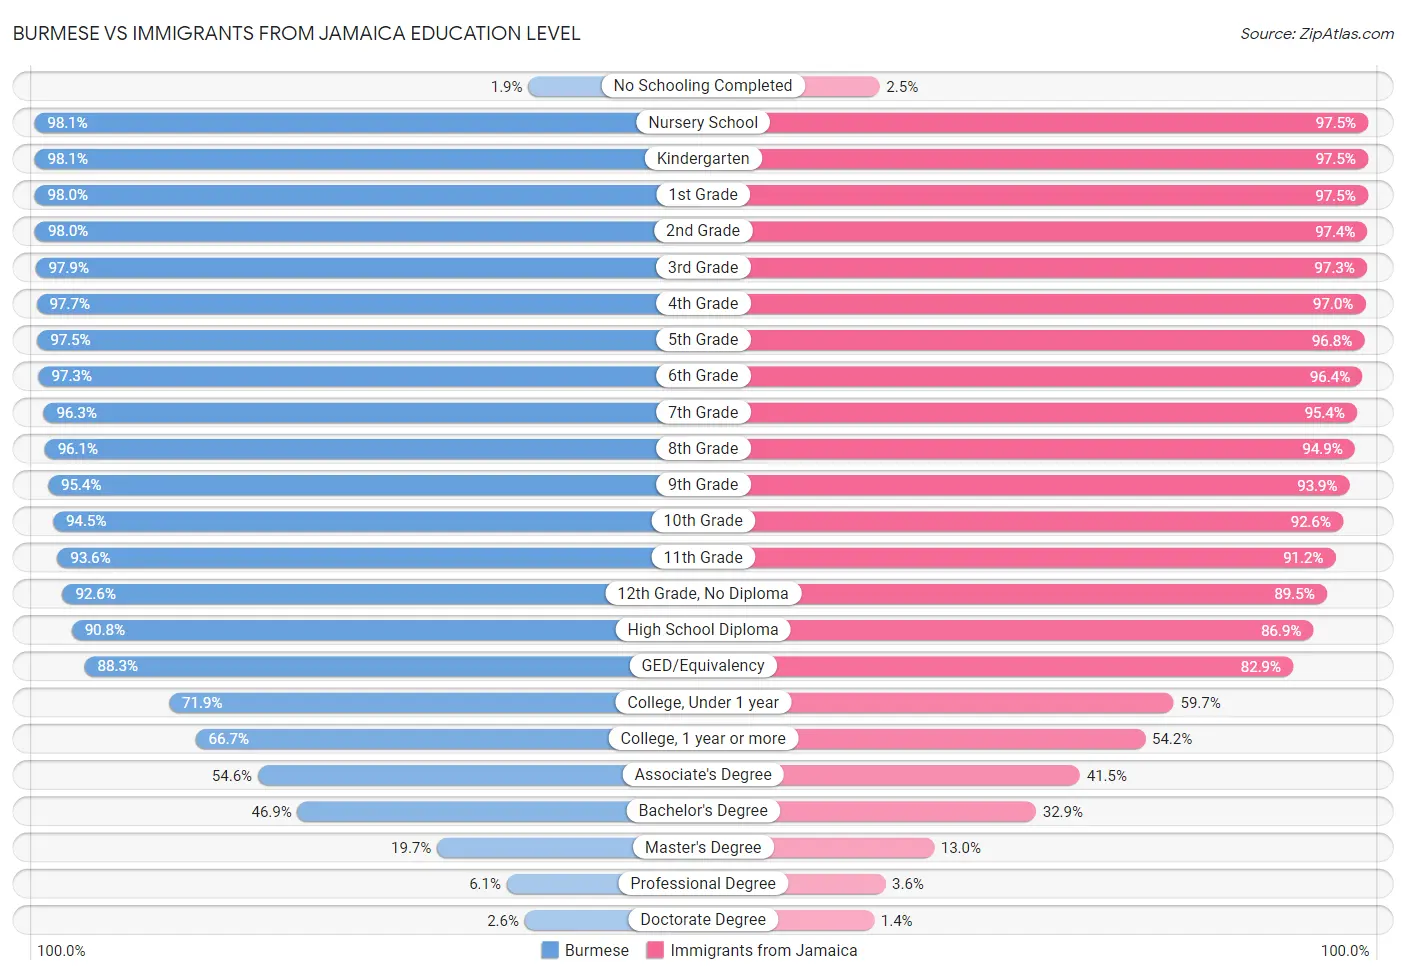 Burmese vs Immigrants from Jamaica Education Level